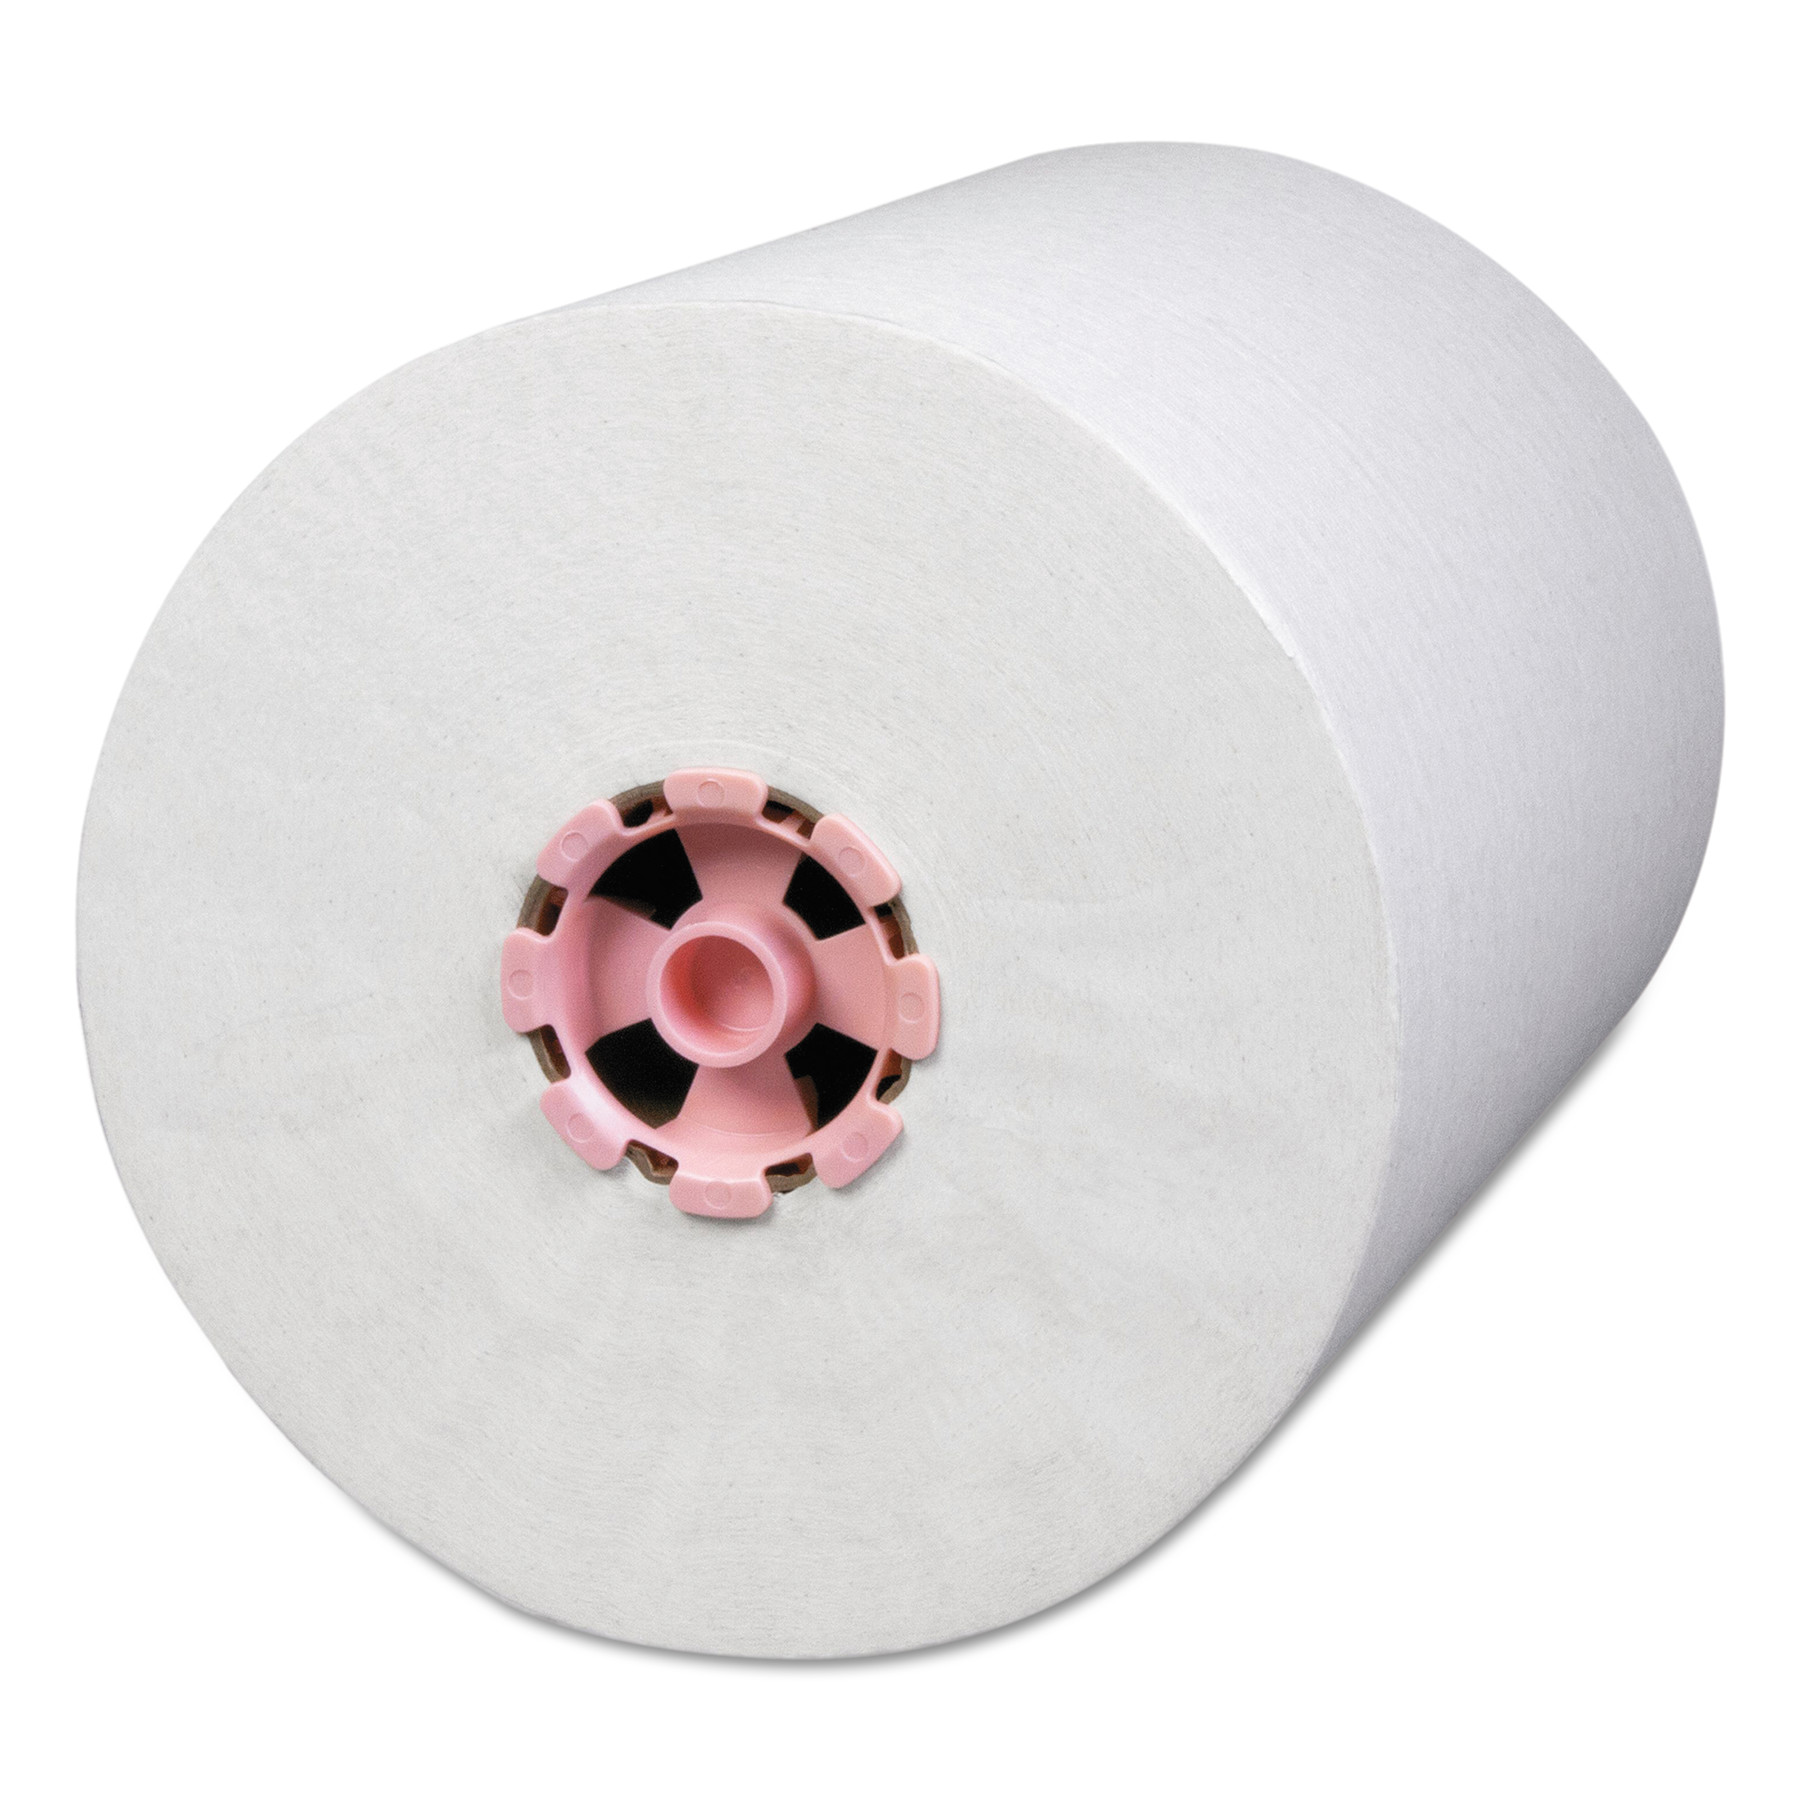 Slimroll Hard Roll Towels, 8" x 580 ft, White, 6 Rolls/Case